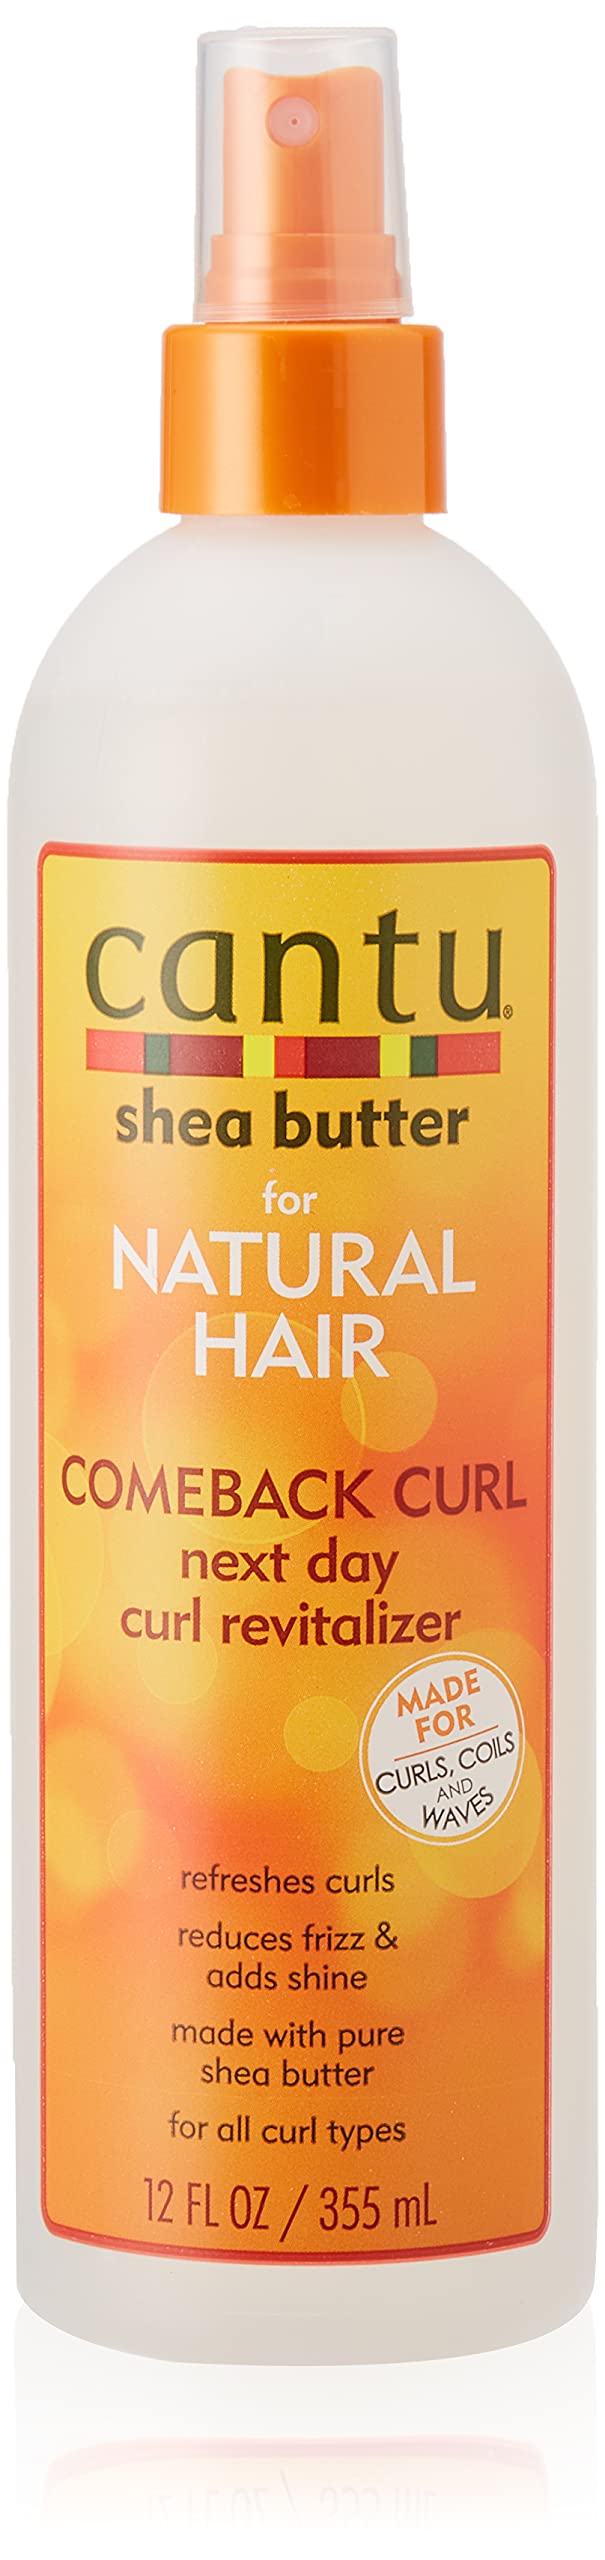 Cantu Shea Butter for Natural Hair Comeback Curl Next Day Curl Revitalizer 355 ml